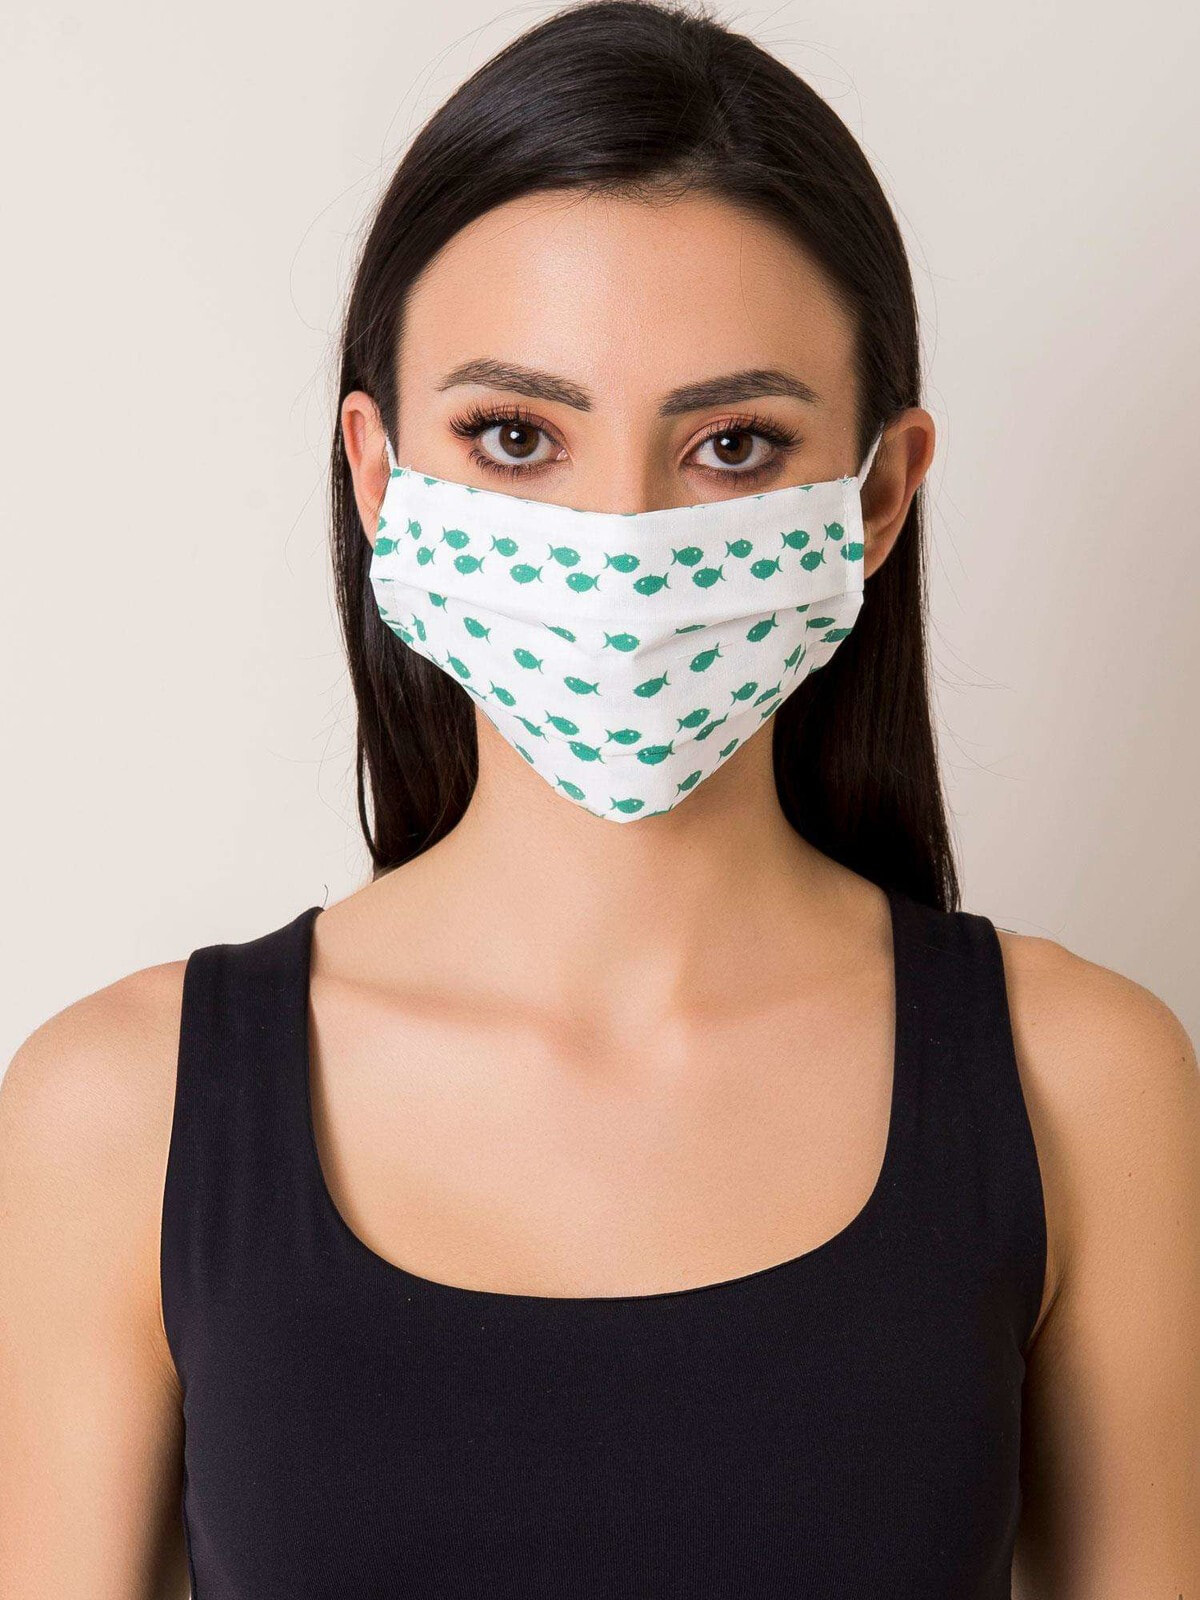 Защитная маска-KW-MO-JK151-бело-зеленая